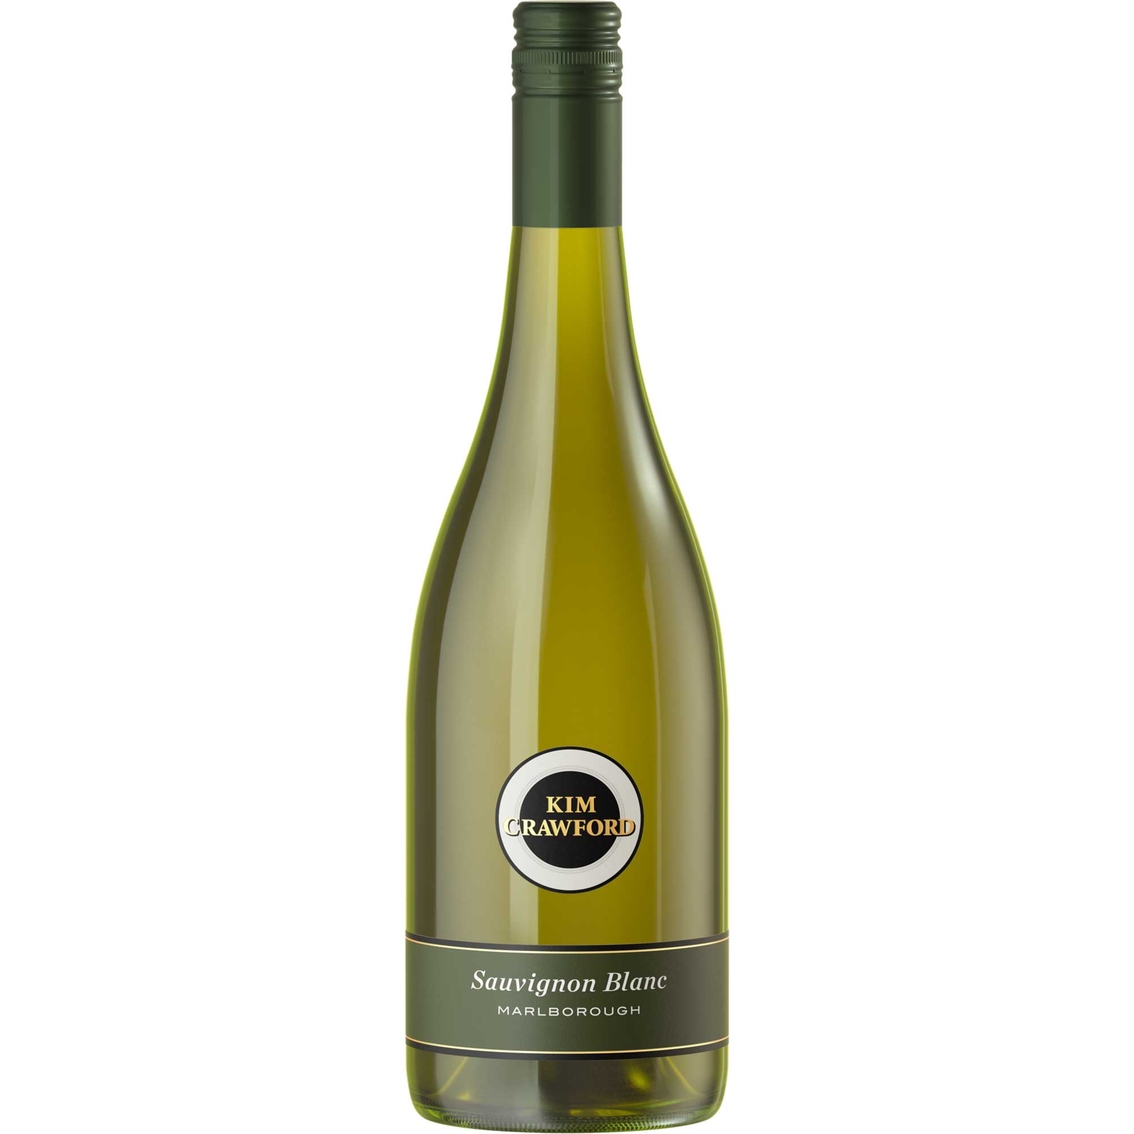 Kim Crawford Sauv Blanc White Wine, 750ml - Image 1 of 2